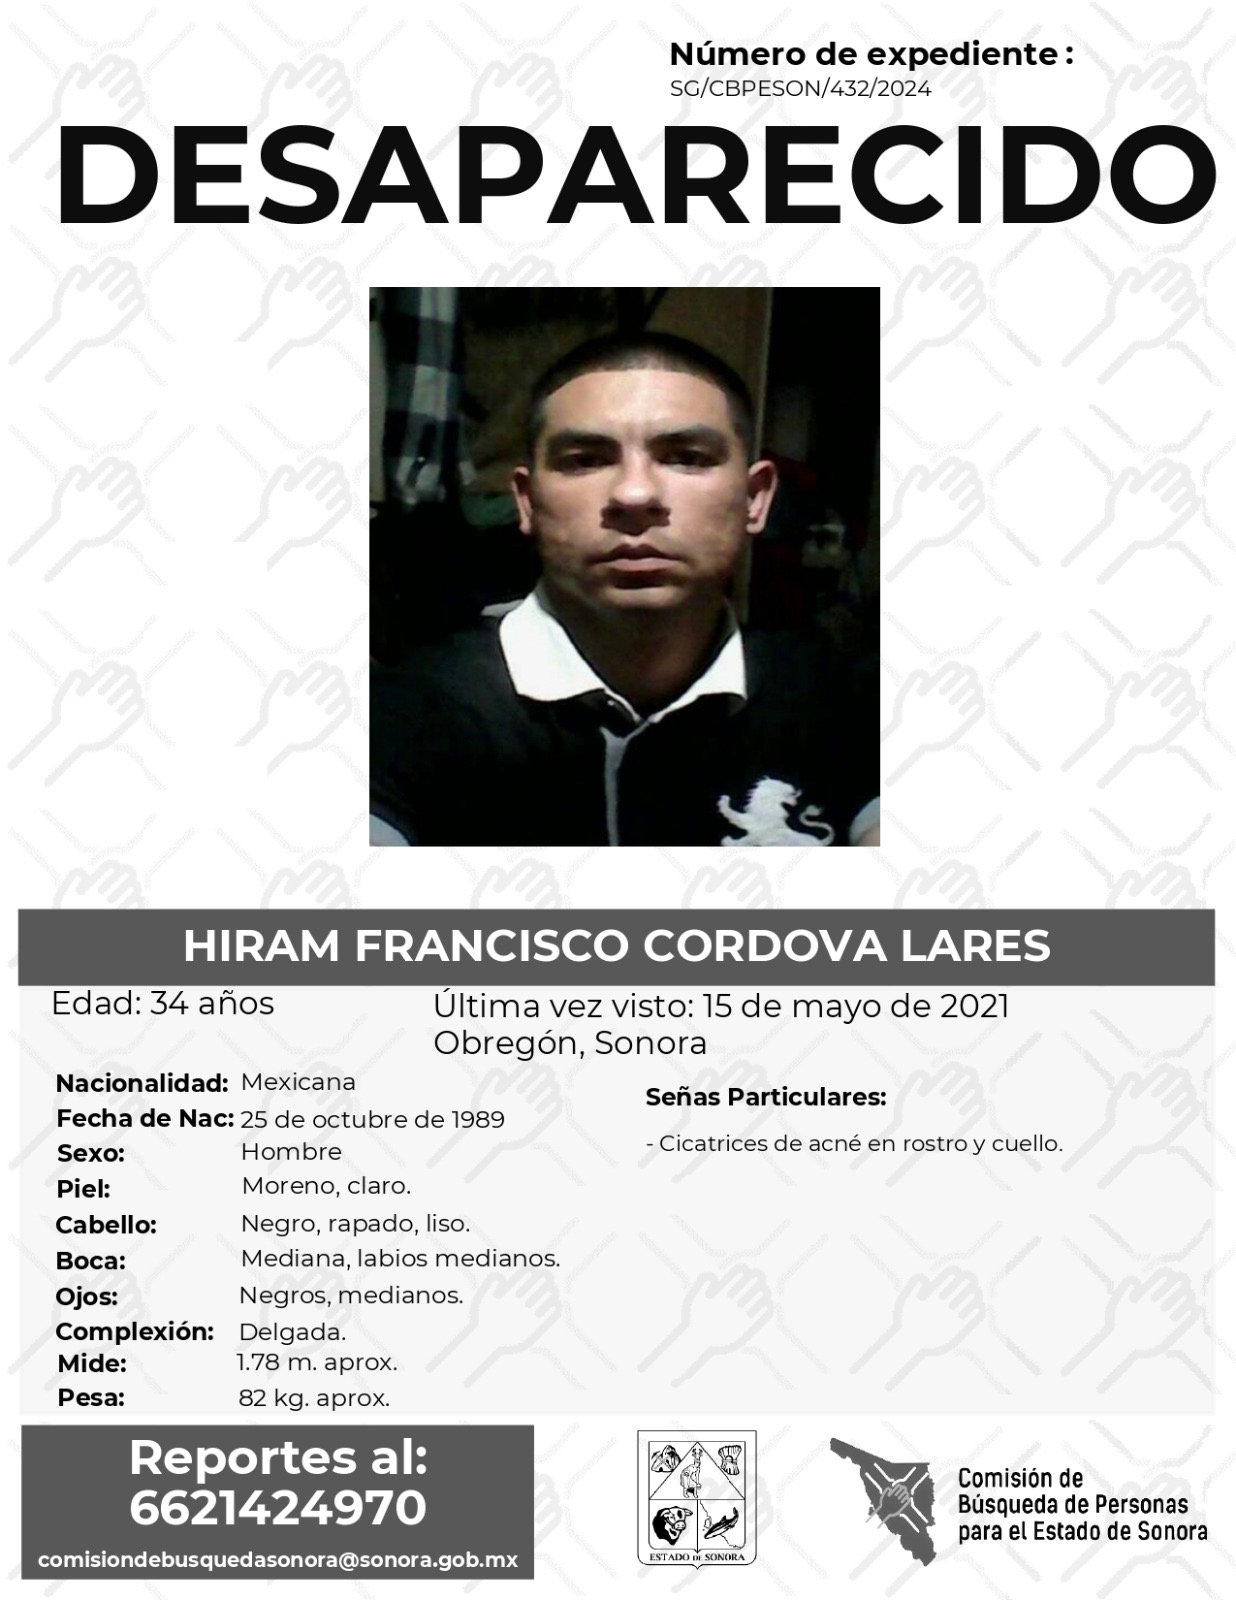 HIRAM FRANCISCO CORDOVA LARES - DESAPARECIDO